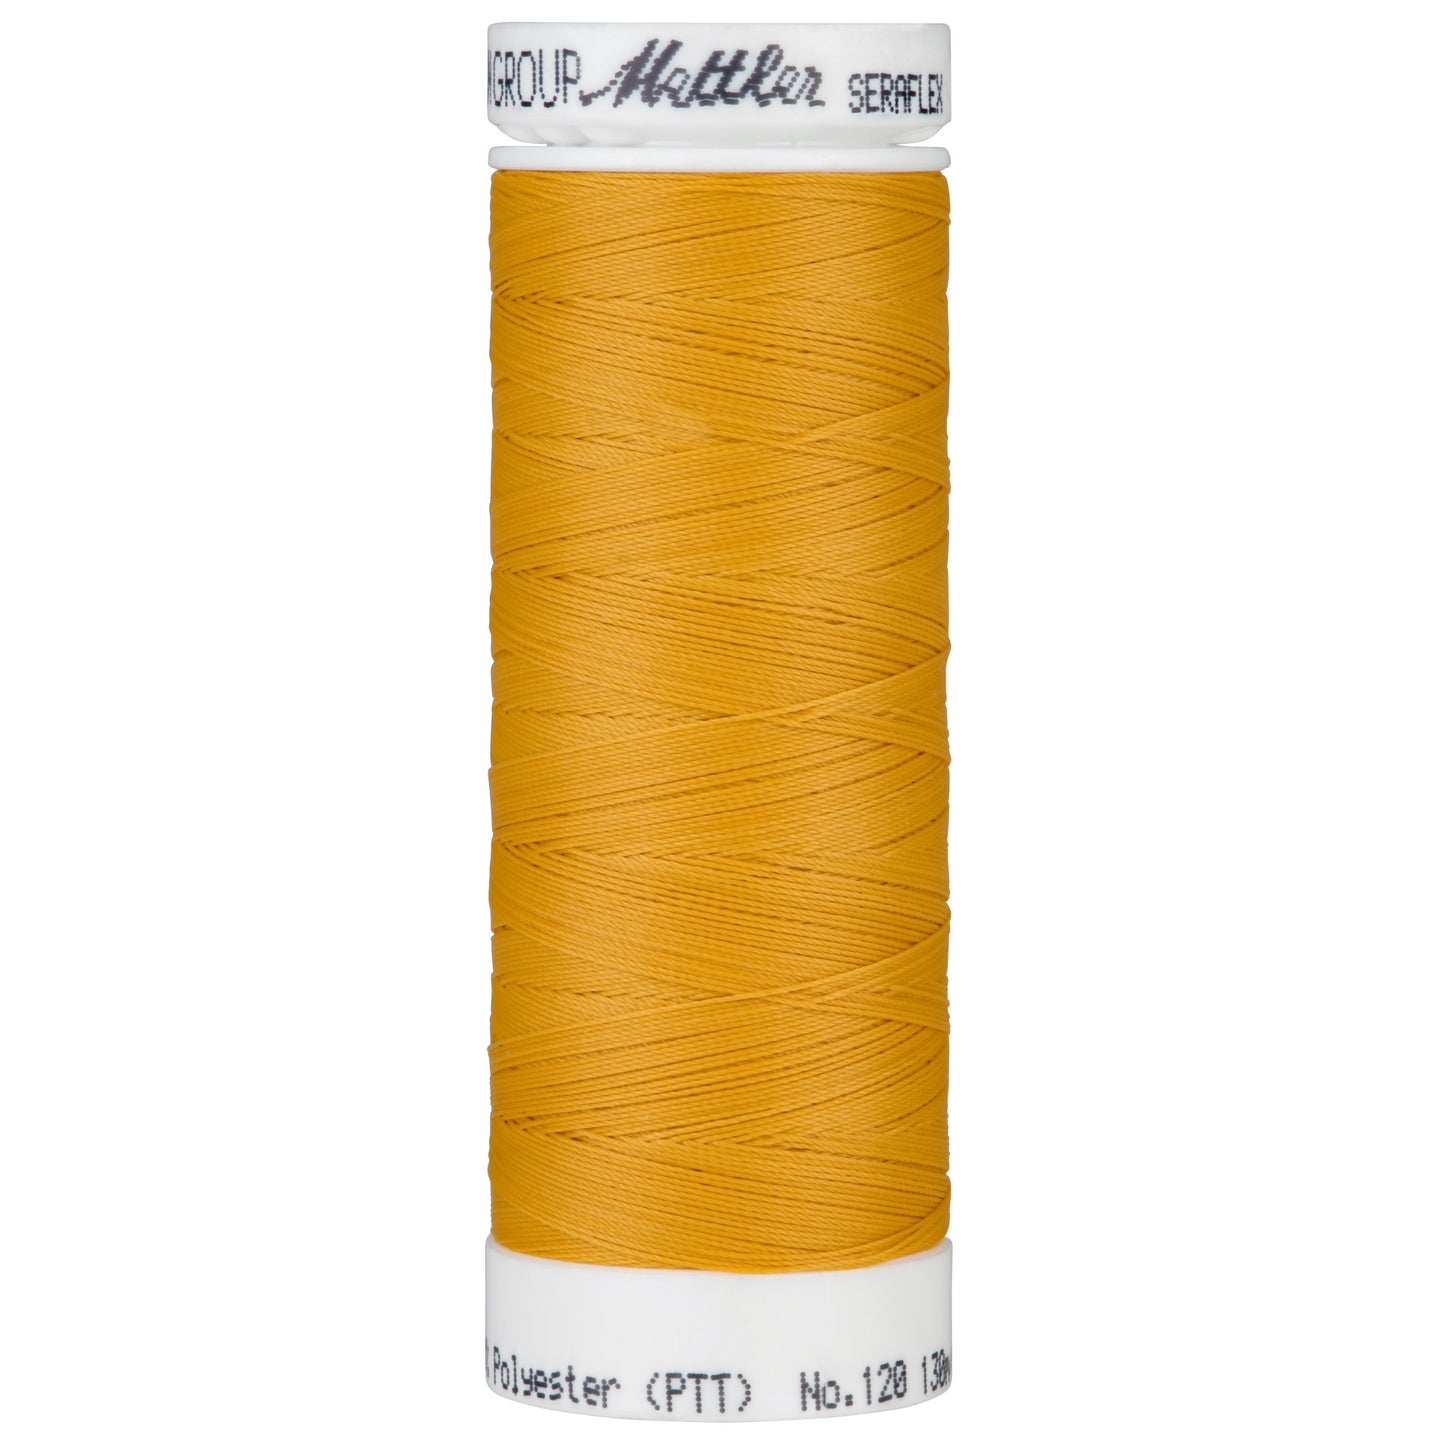 Seraflex - Mettler - Stretch Thread - For Stretchy Seams - 130 Meters - Star Gold